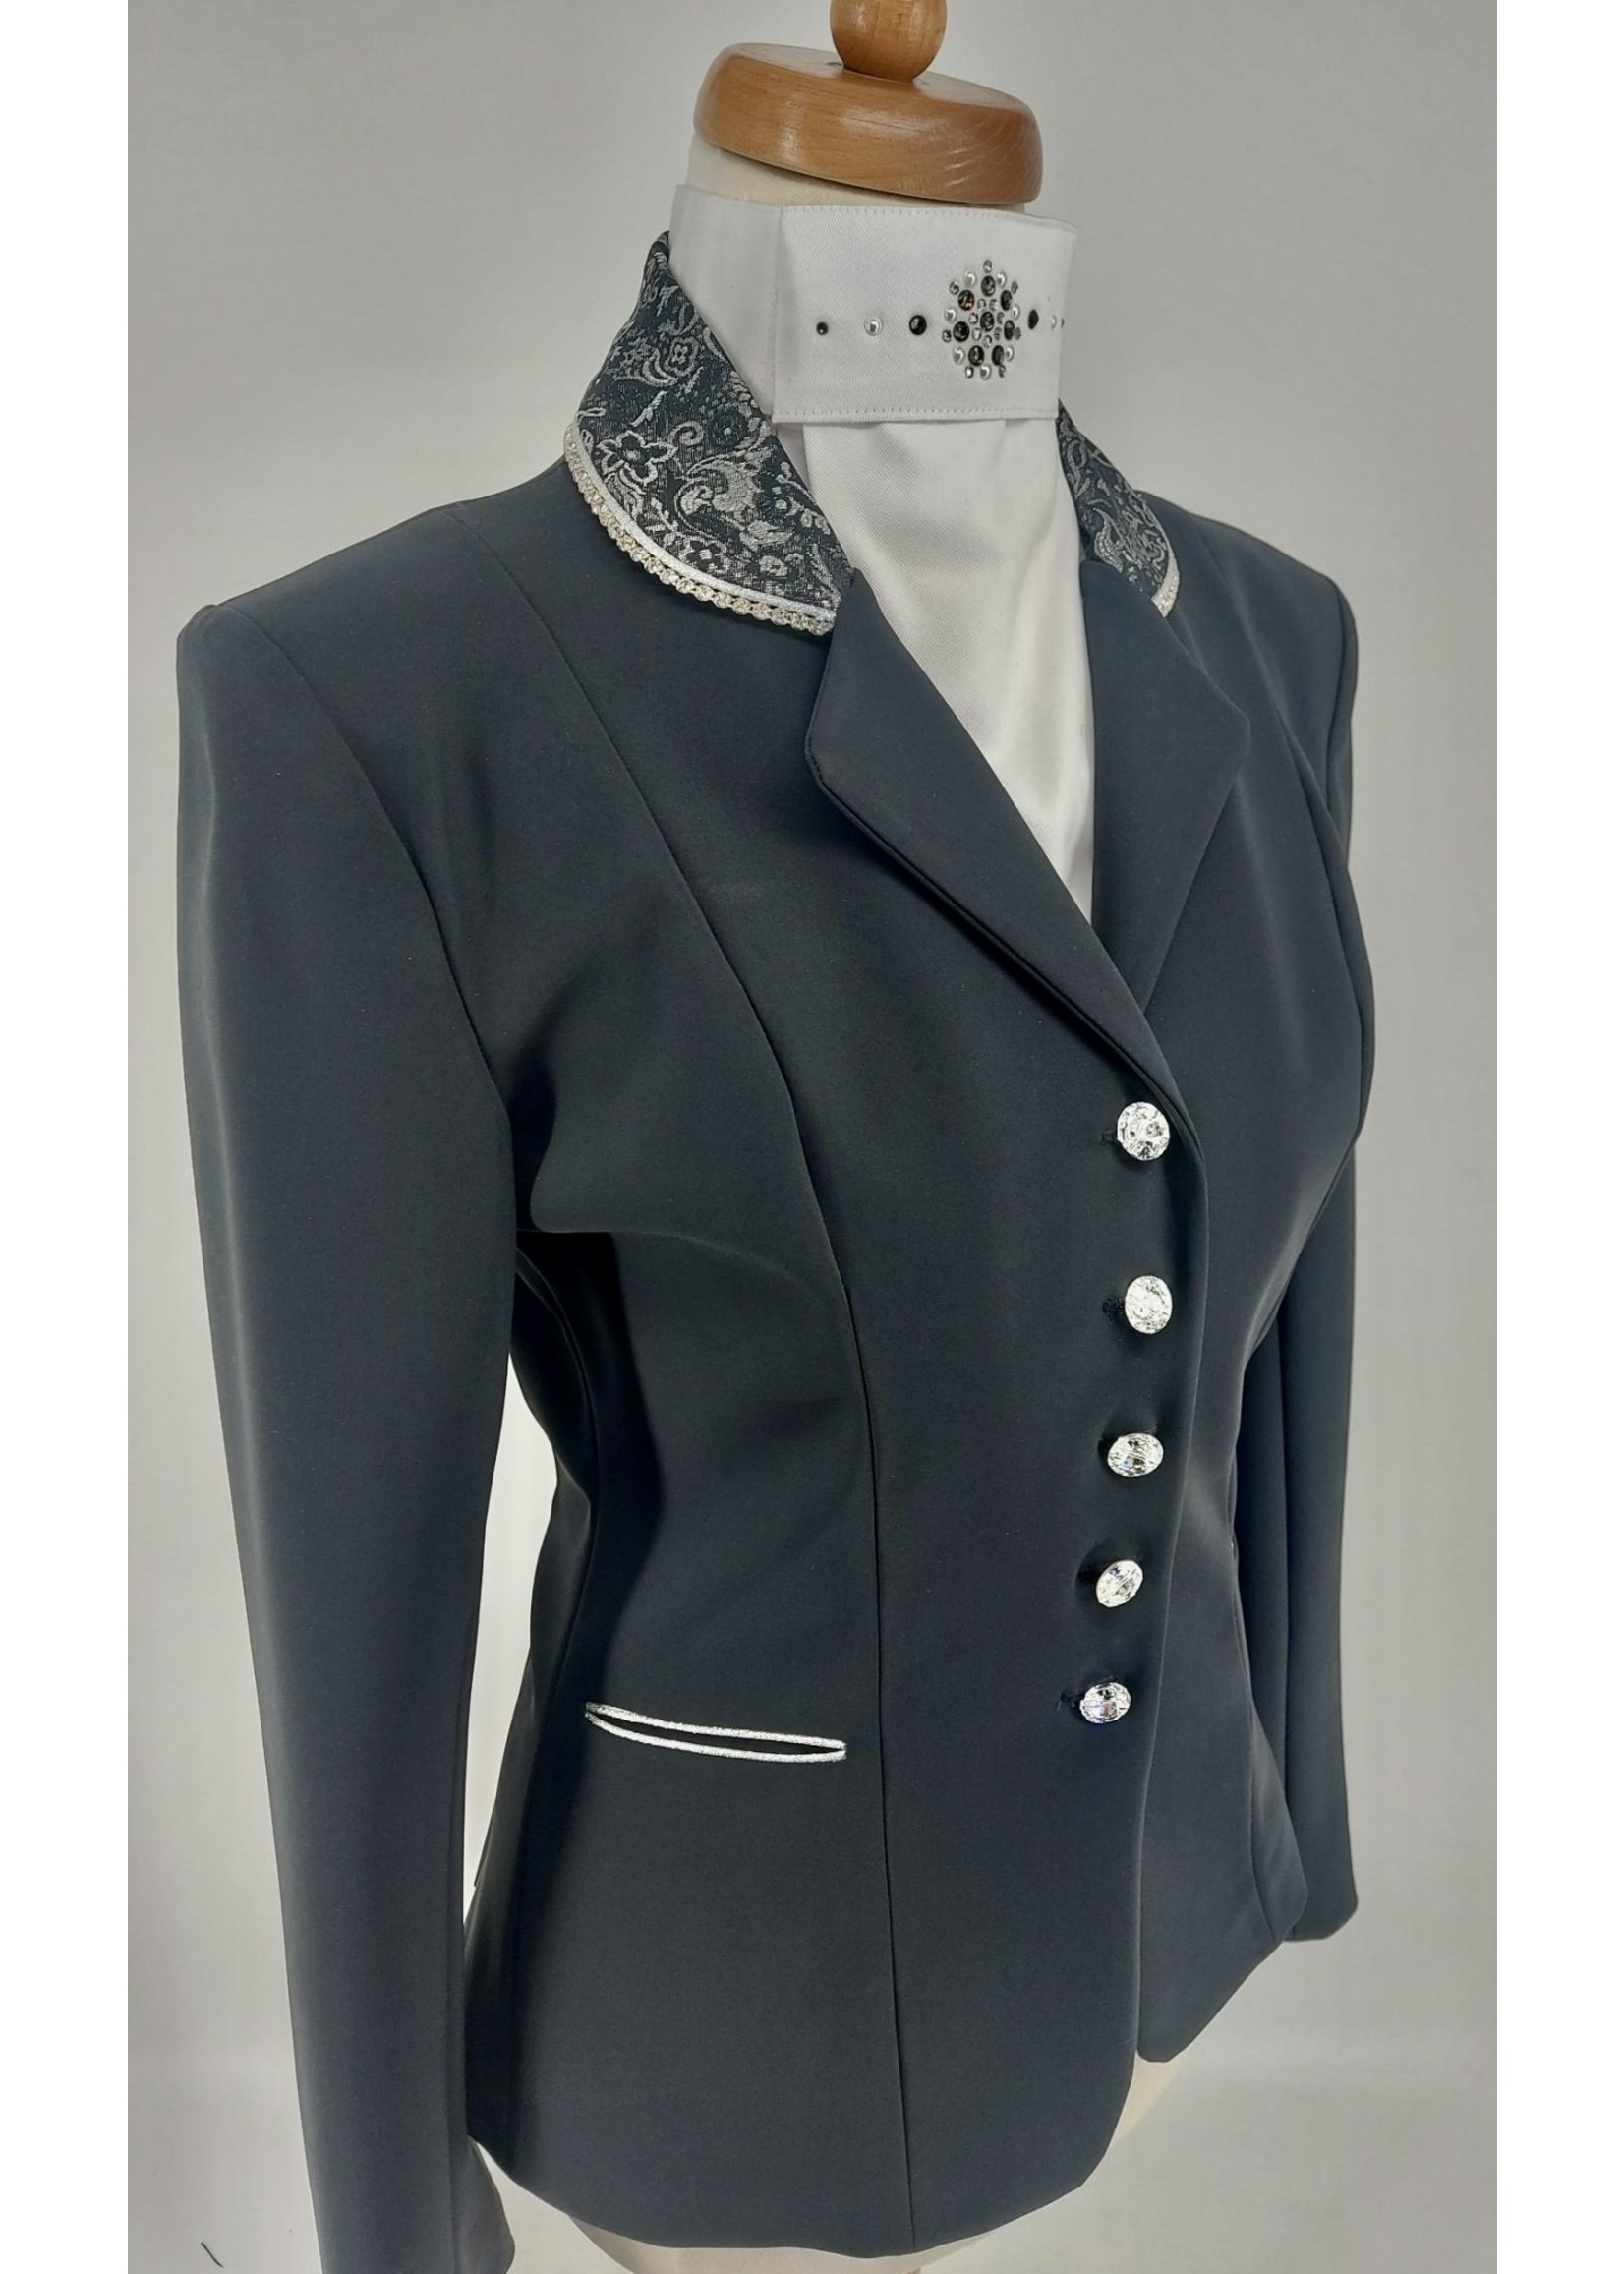 Lamantia Couture Nederland Competition jacket sportive black  le black/silver